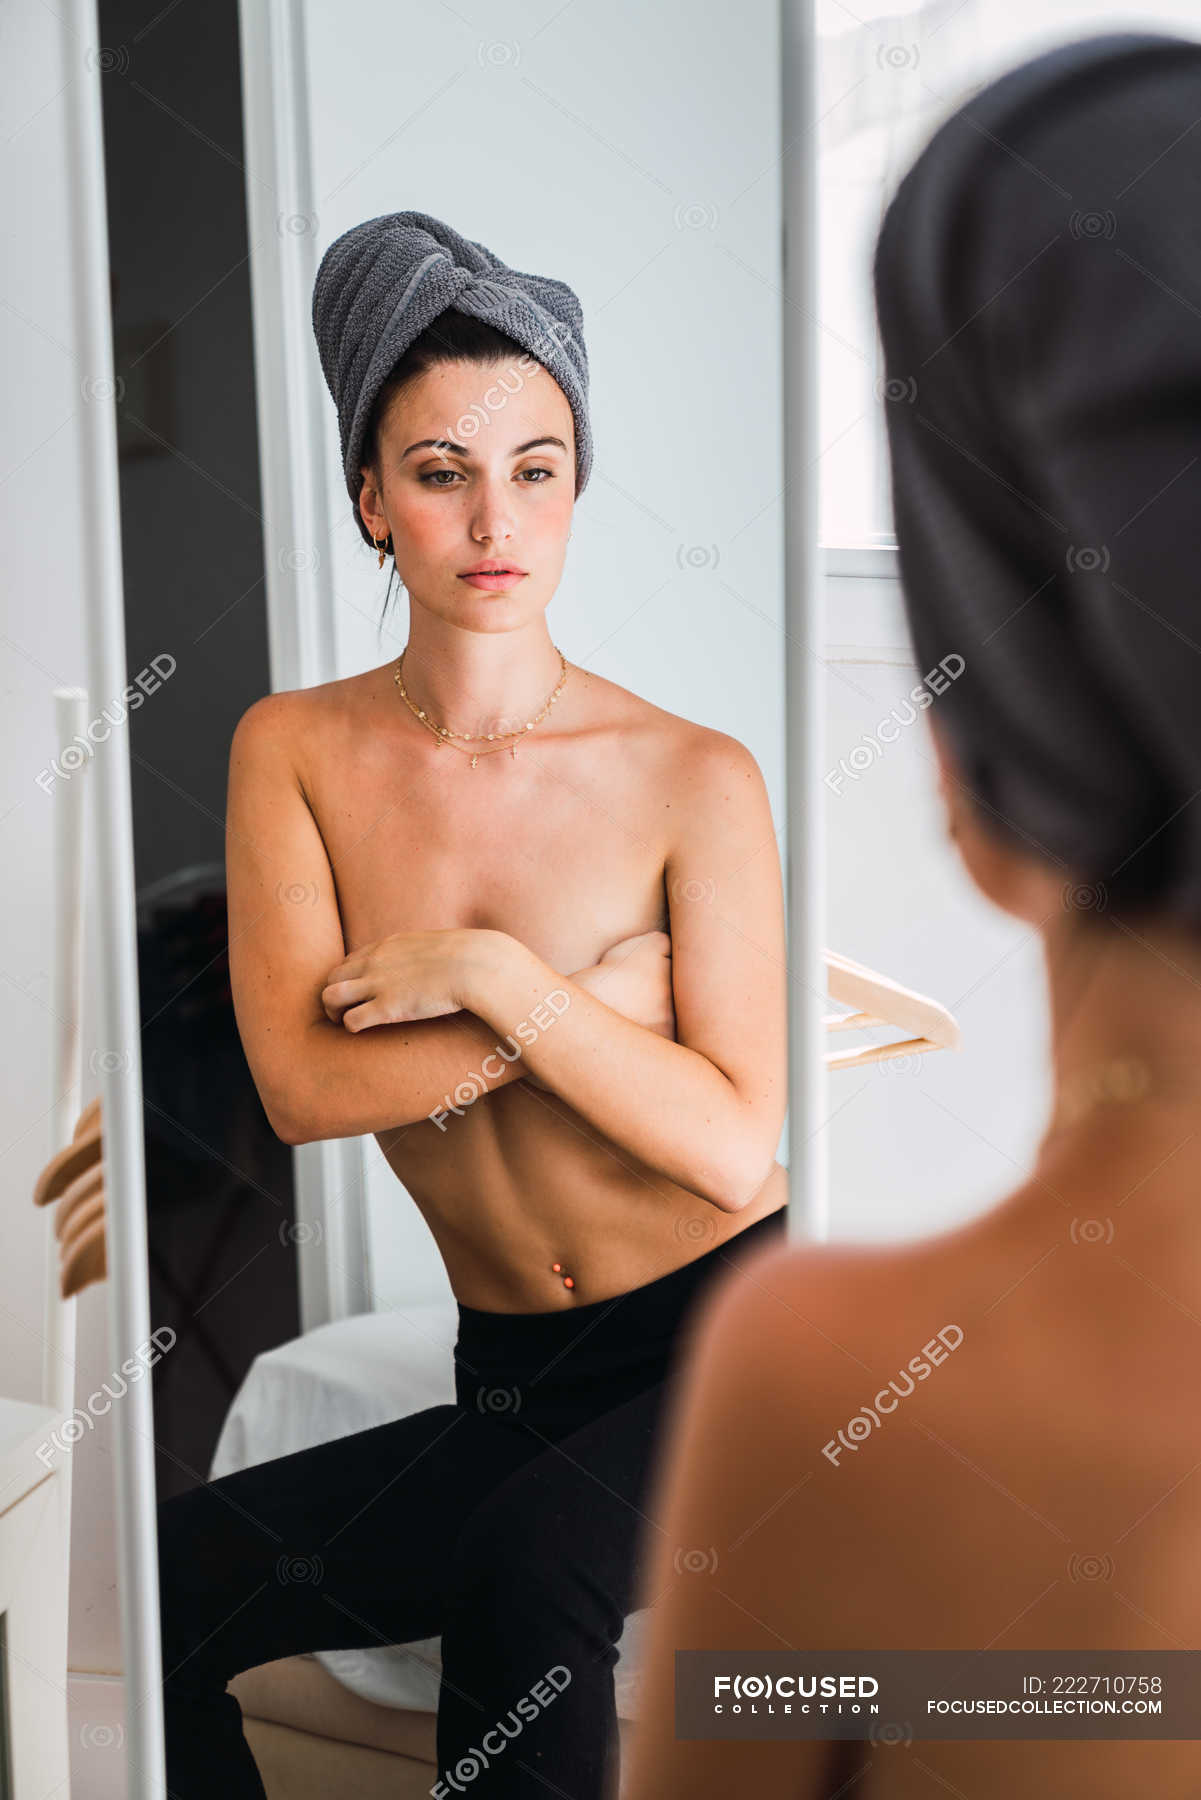 Topless Mirror